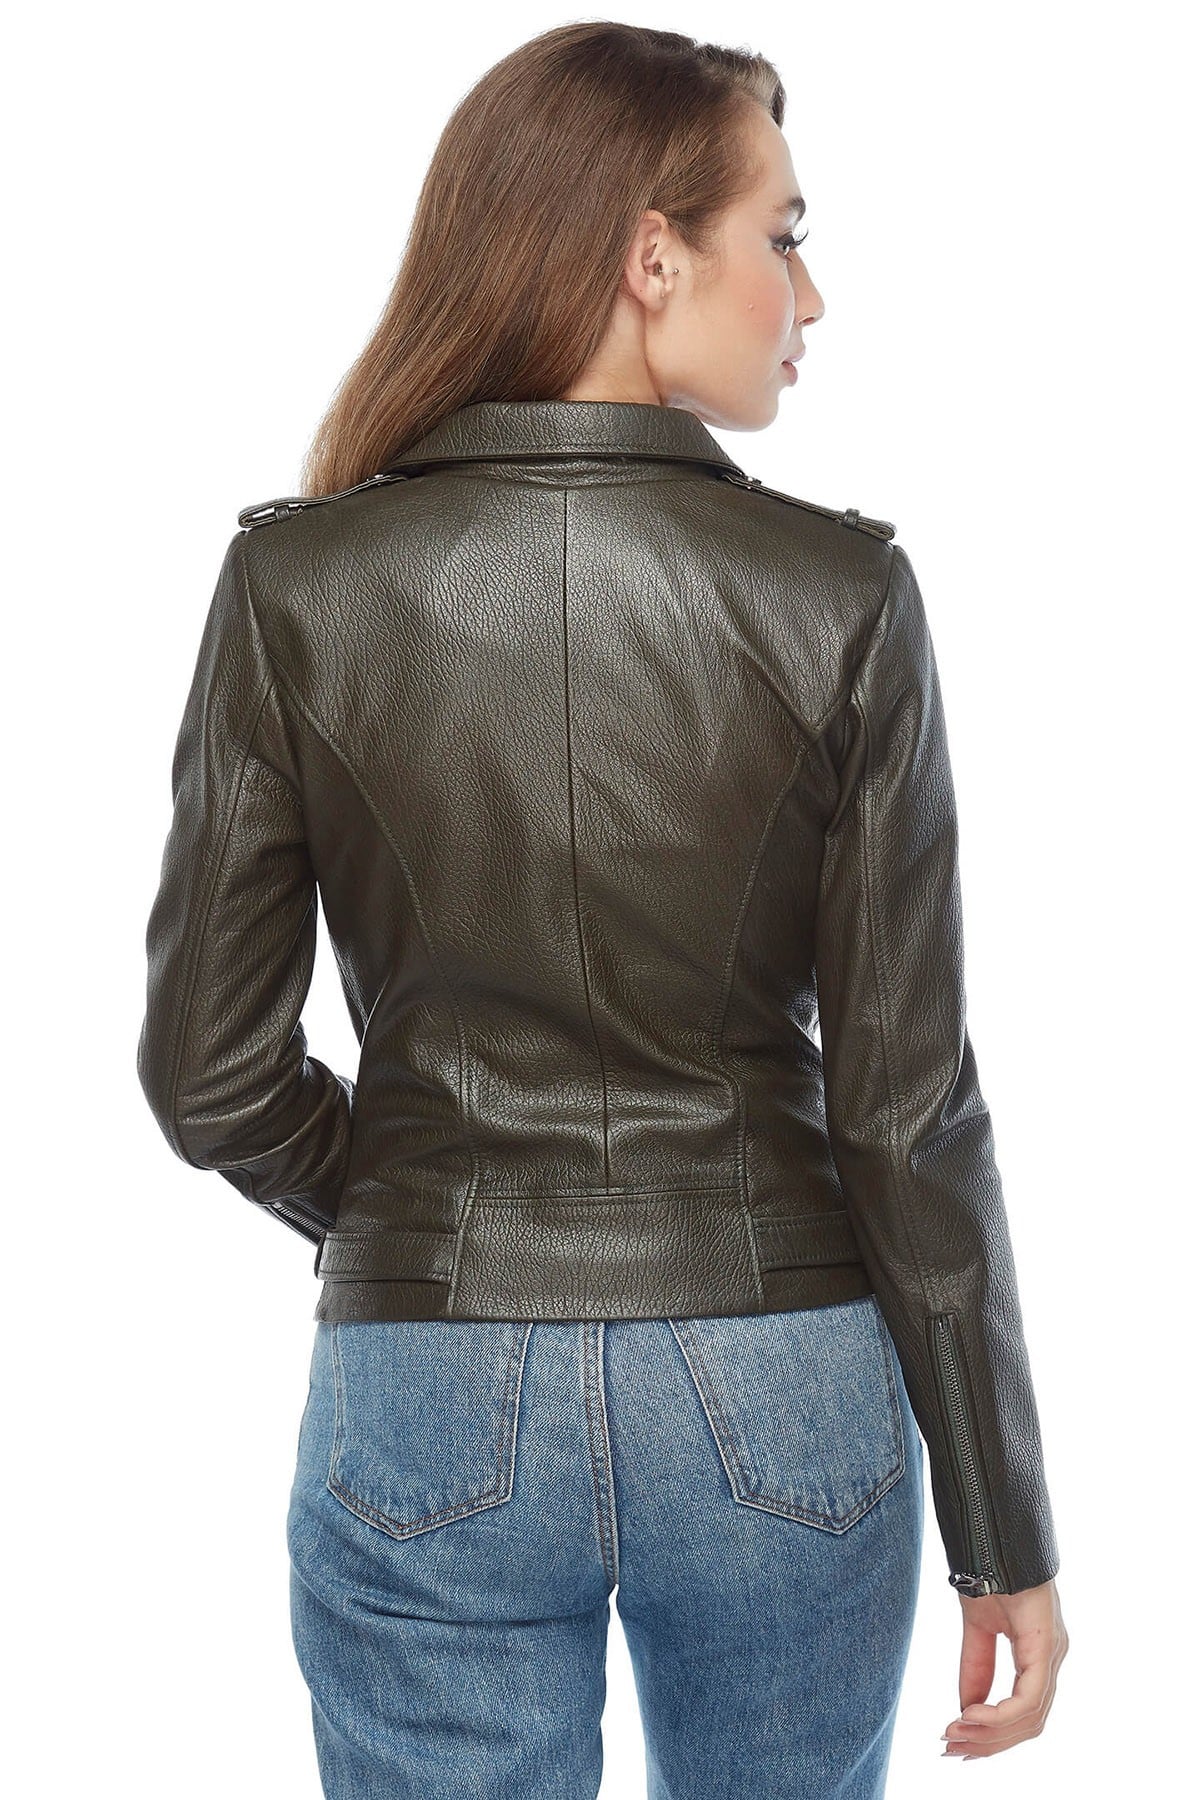 Chloe Dark Brown Leather Moto Jacket Women Back